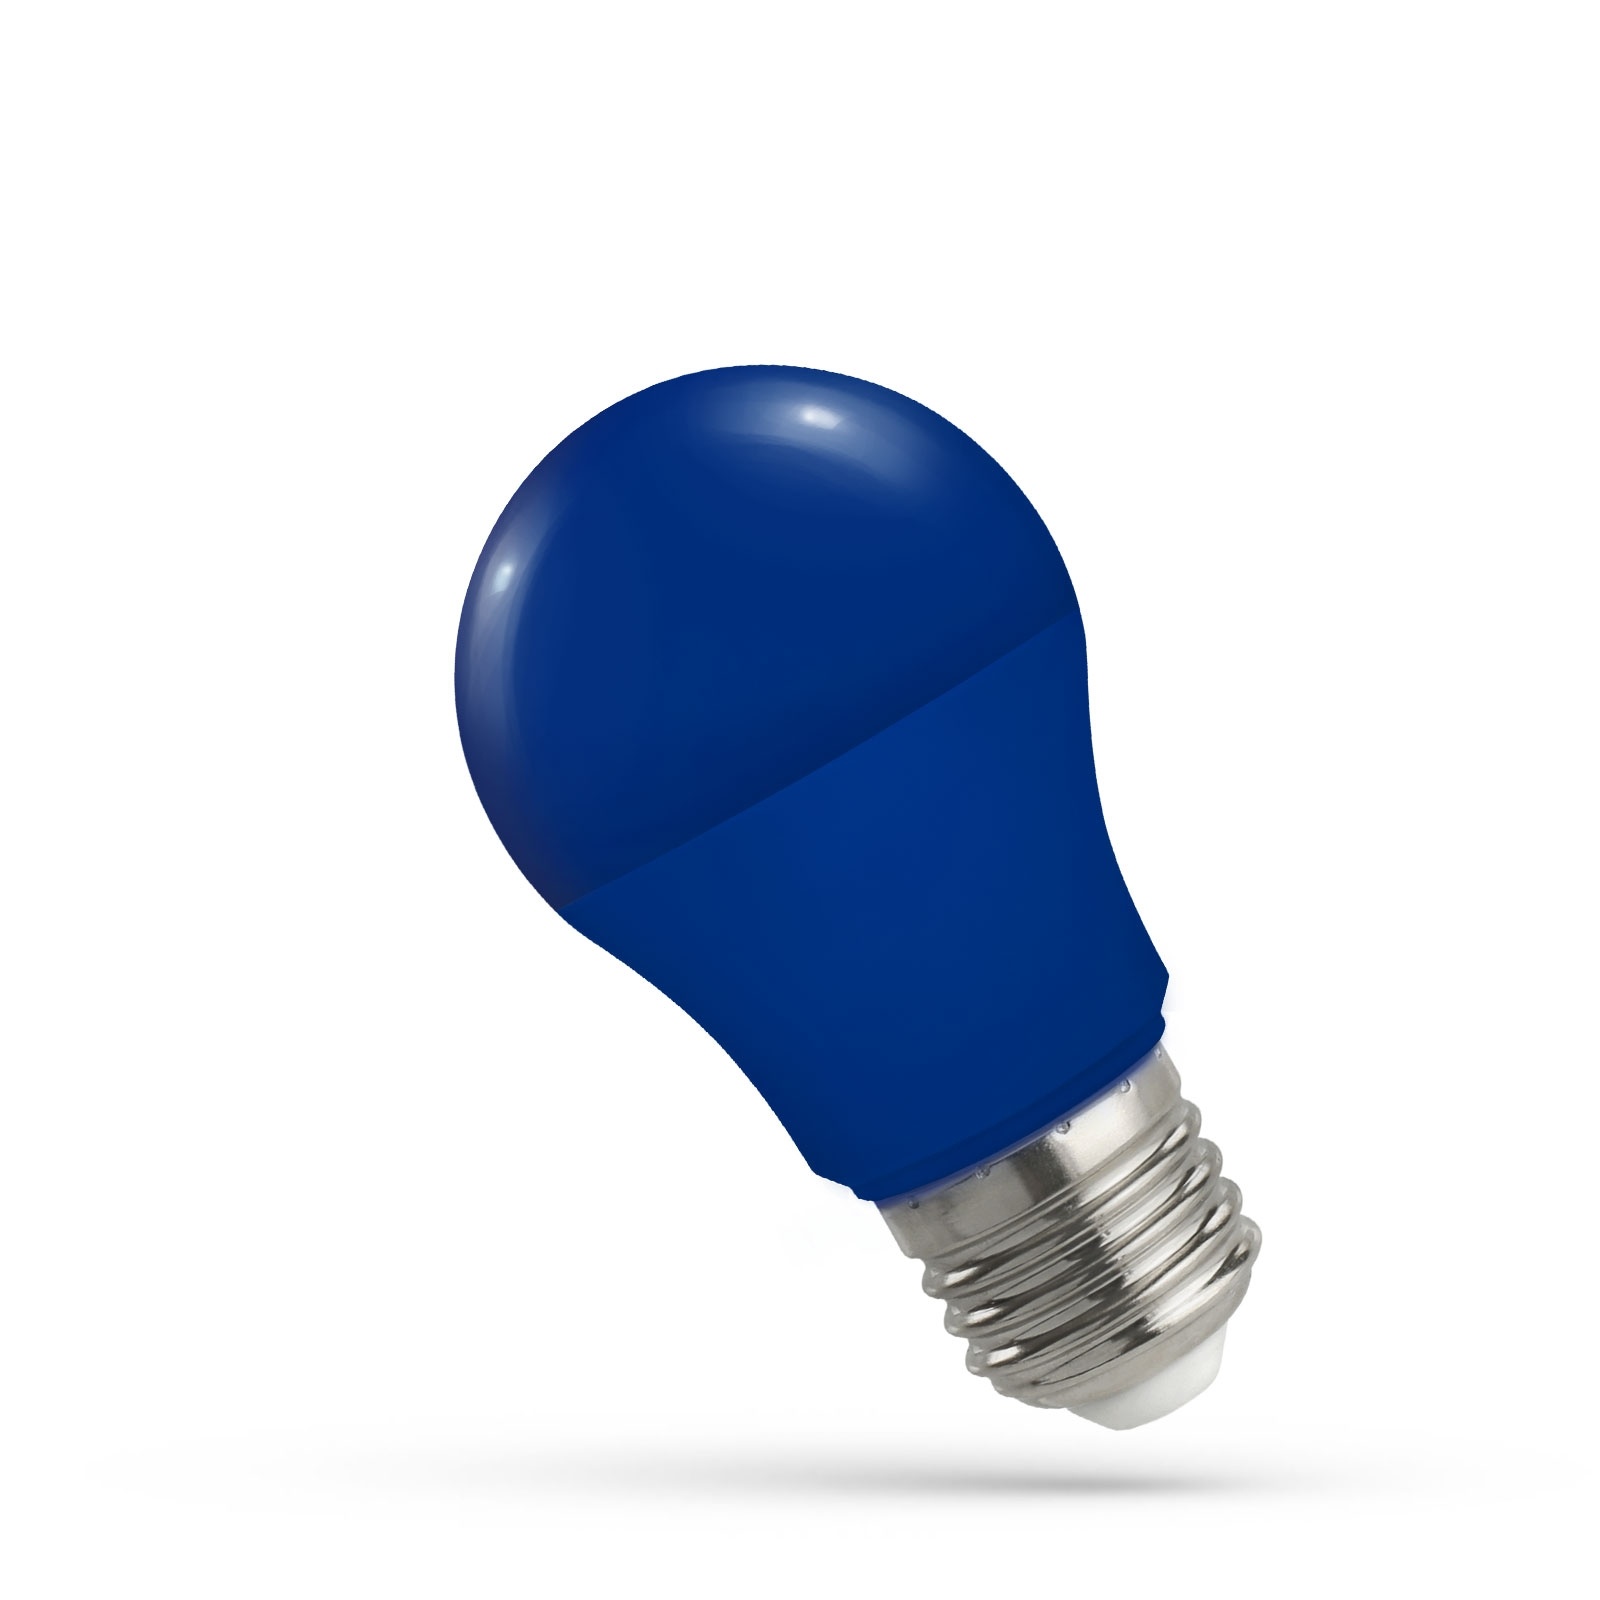 LED Lamp E27 fitting A50 Blauw licht - 5W vervangt 50W -